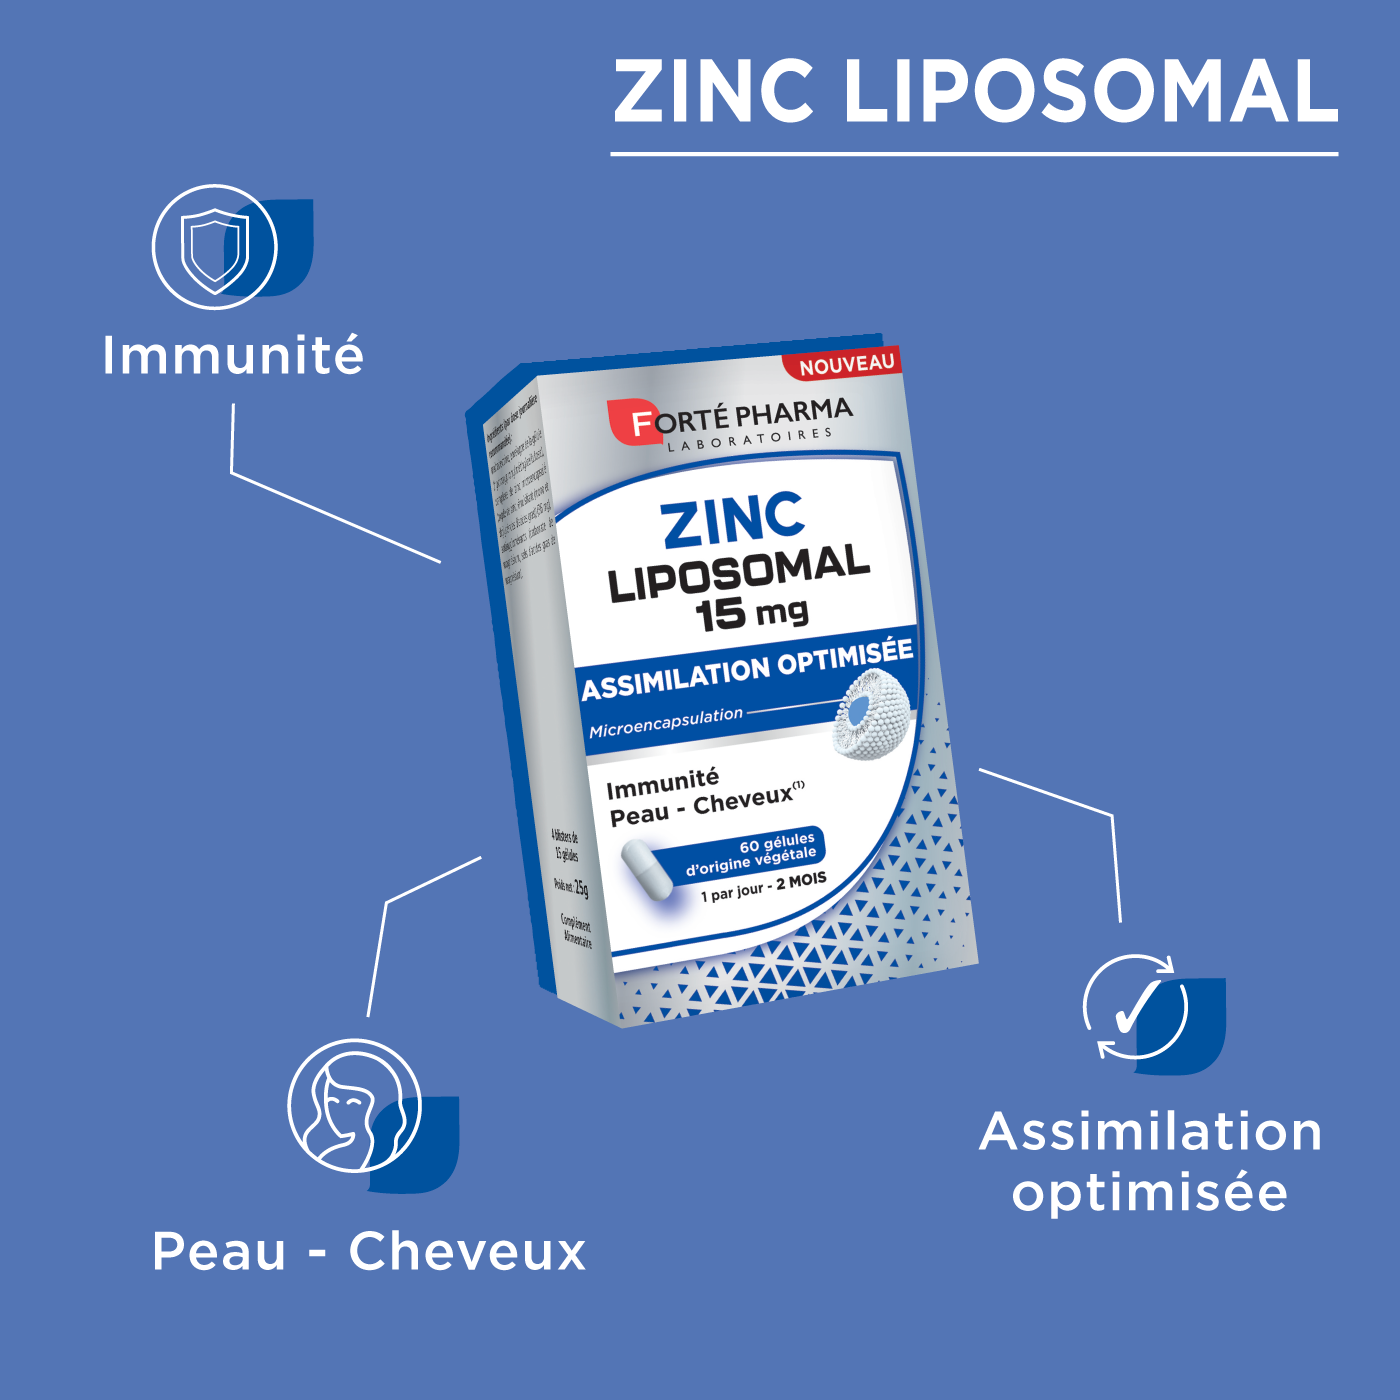 Zinc Liposomal attributs immunité